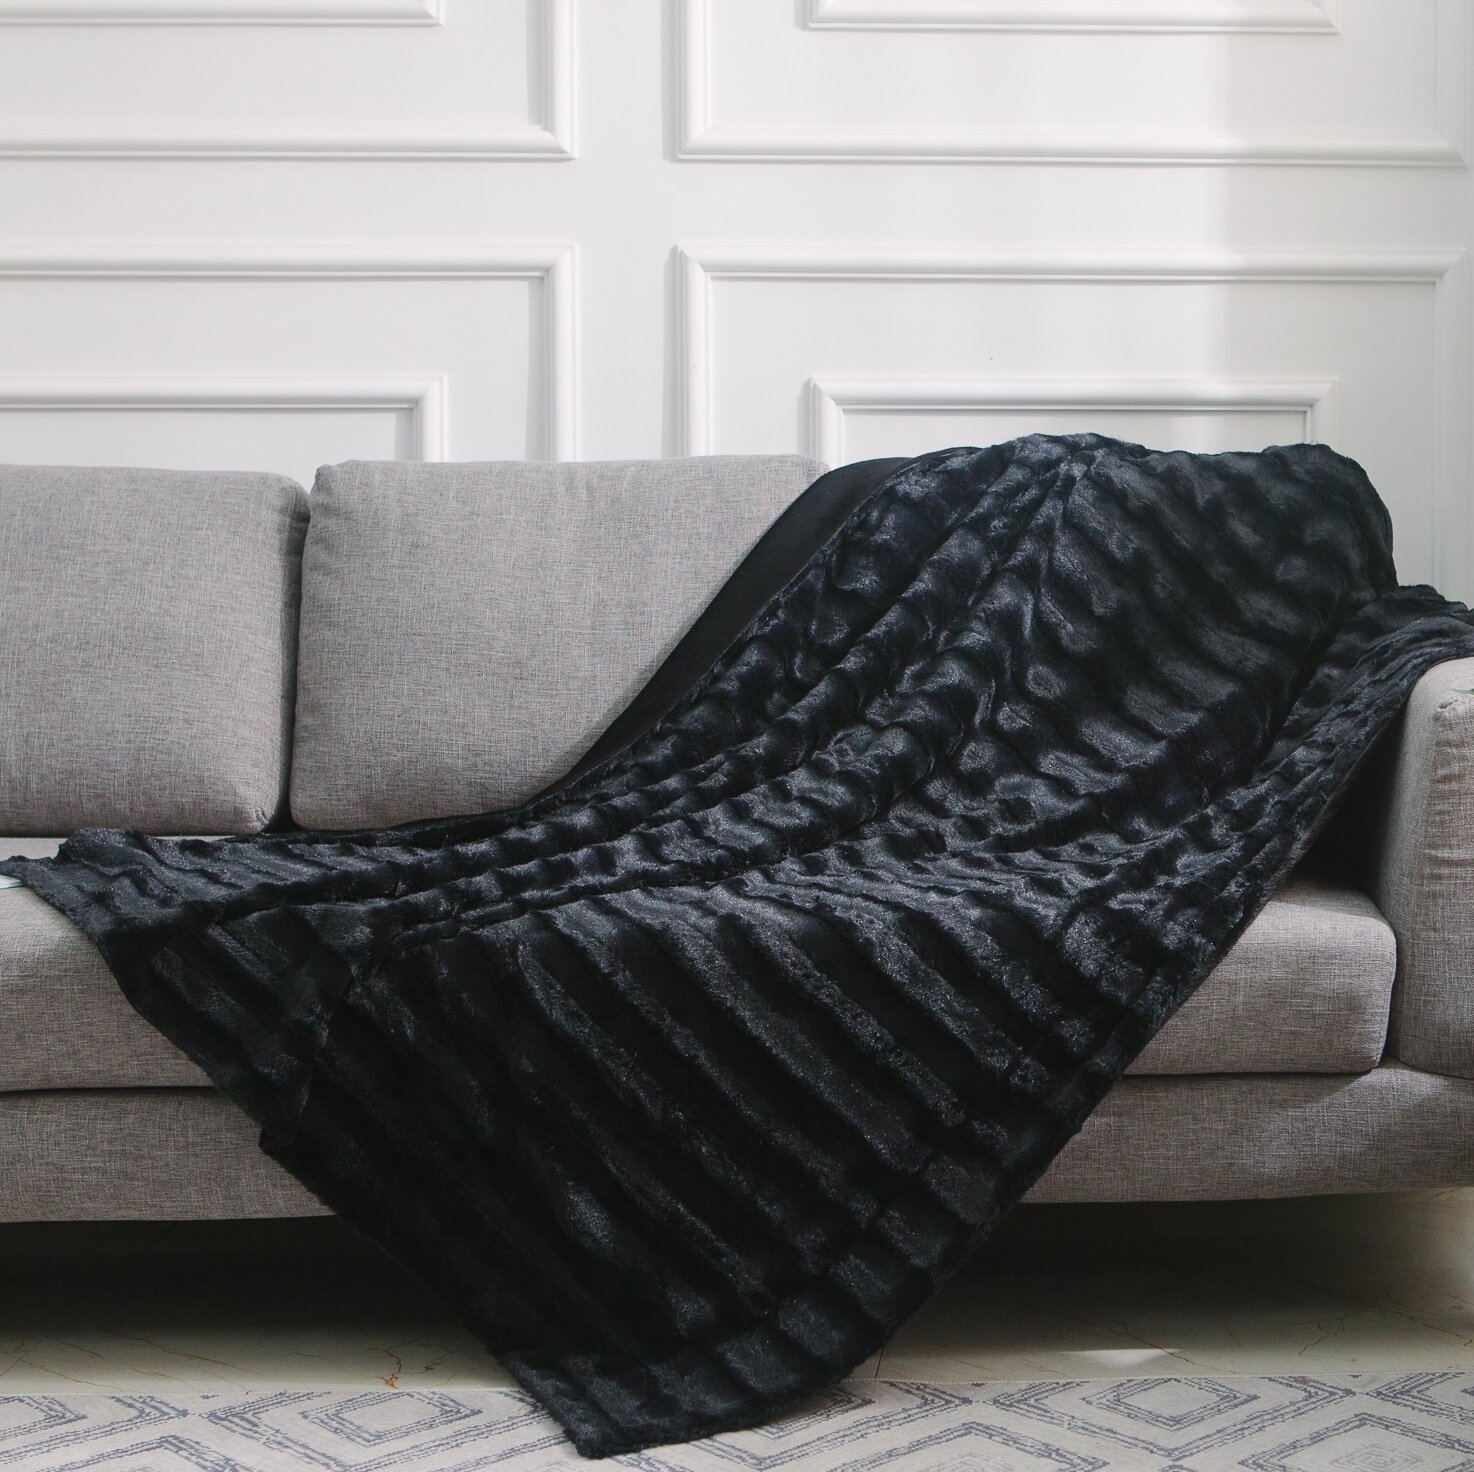 Black Plush Blankets Throws Youll Love In 2021 Wayfair